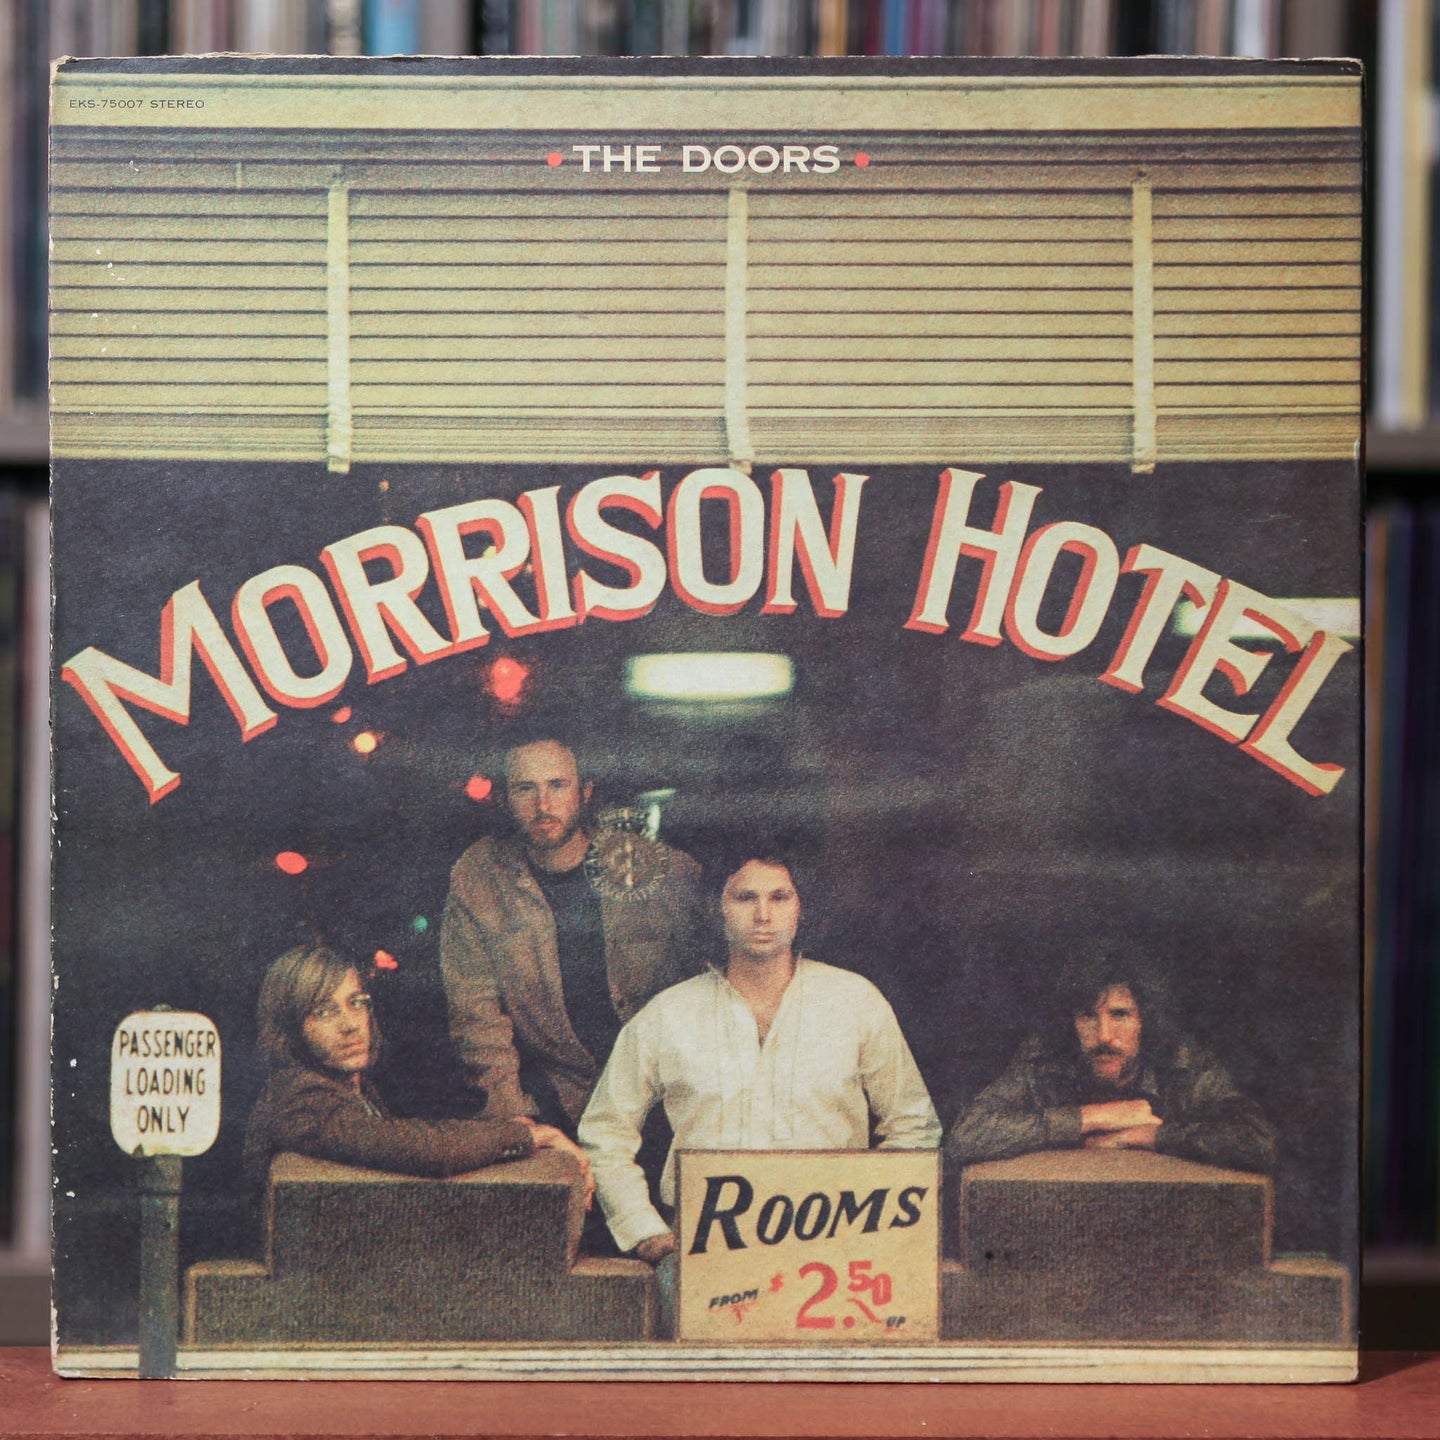 The Doors - Morrison Hotel - 1970 Elektra, VG+/VG